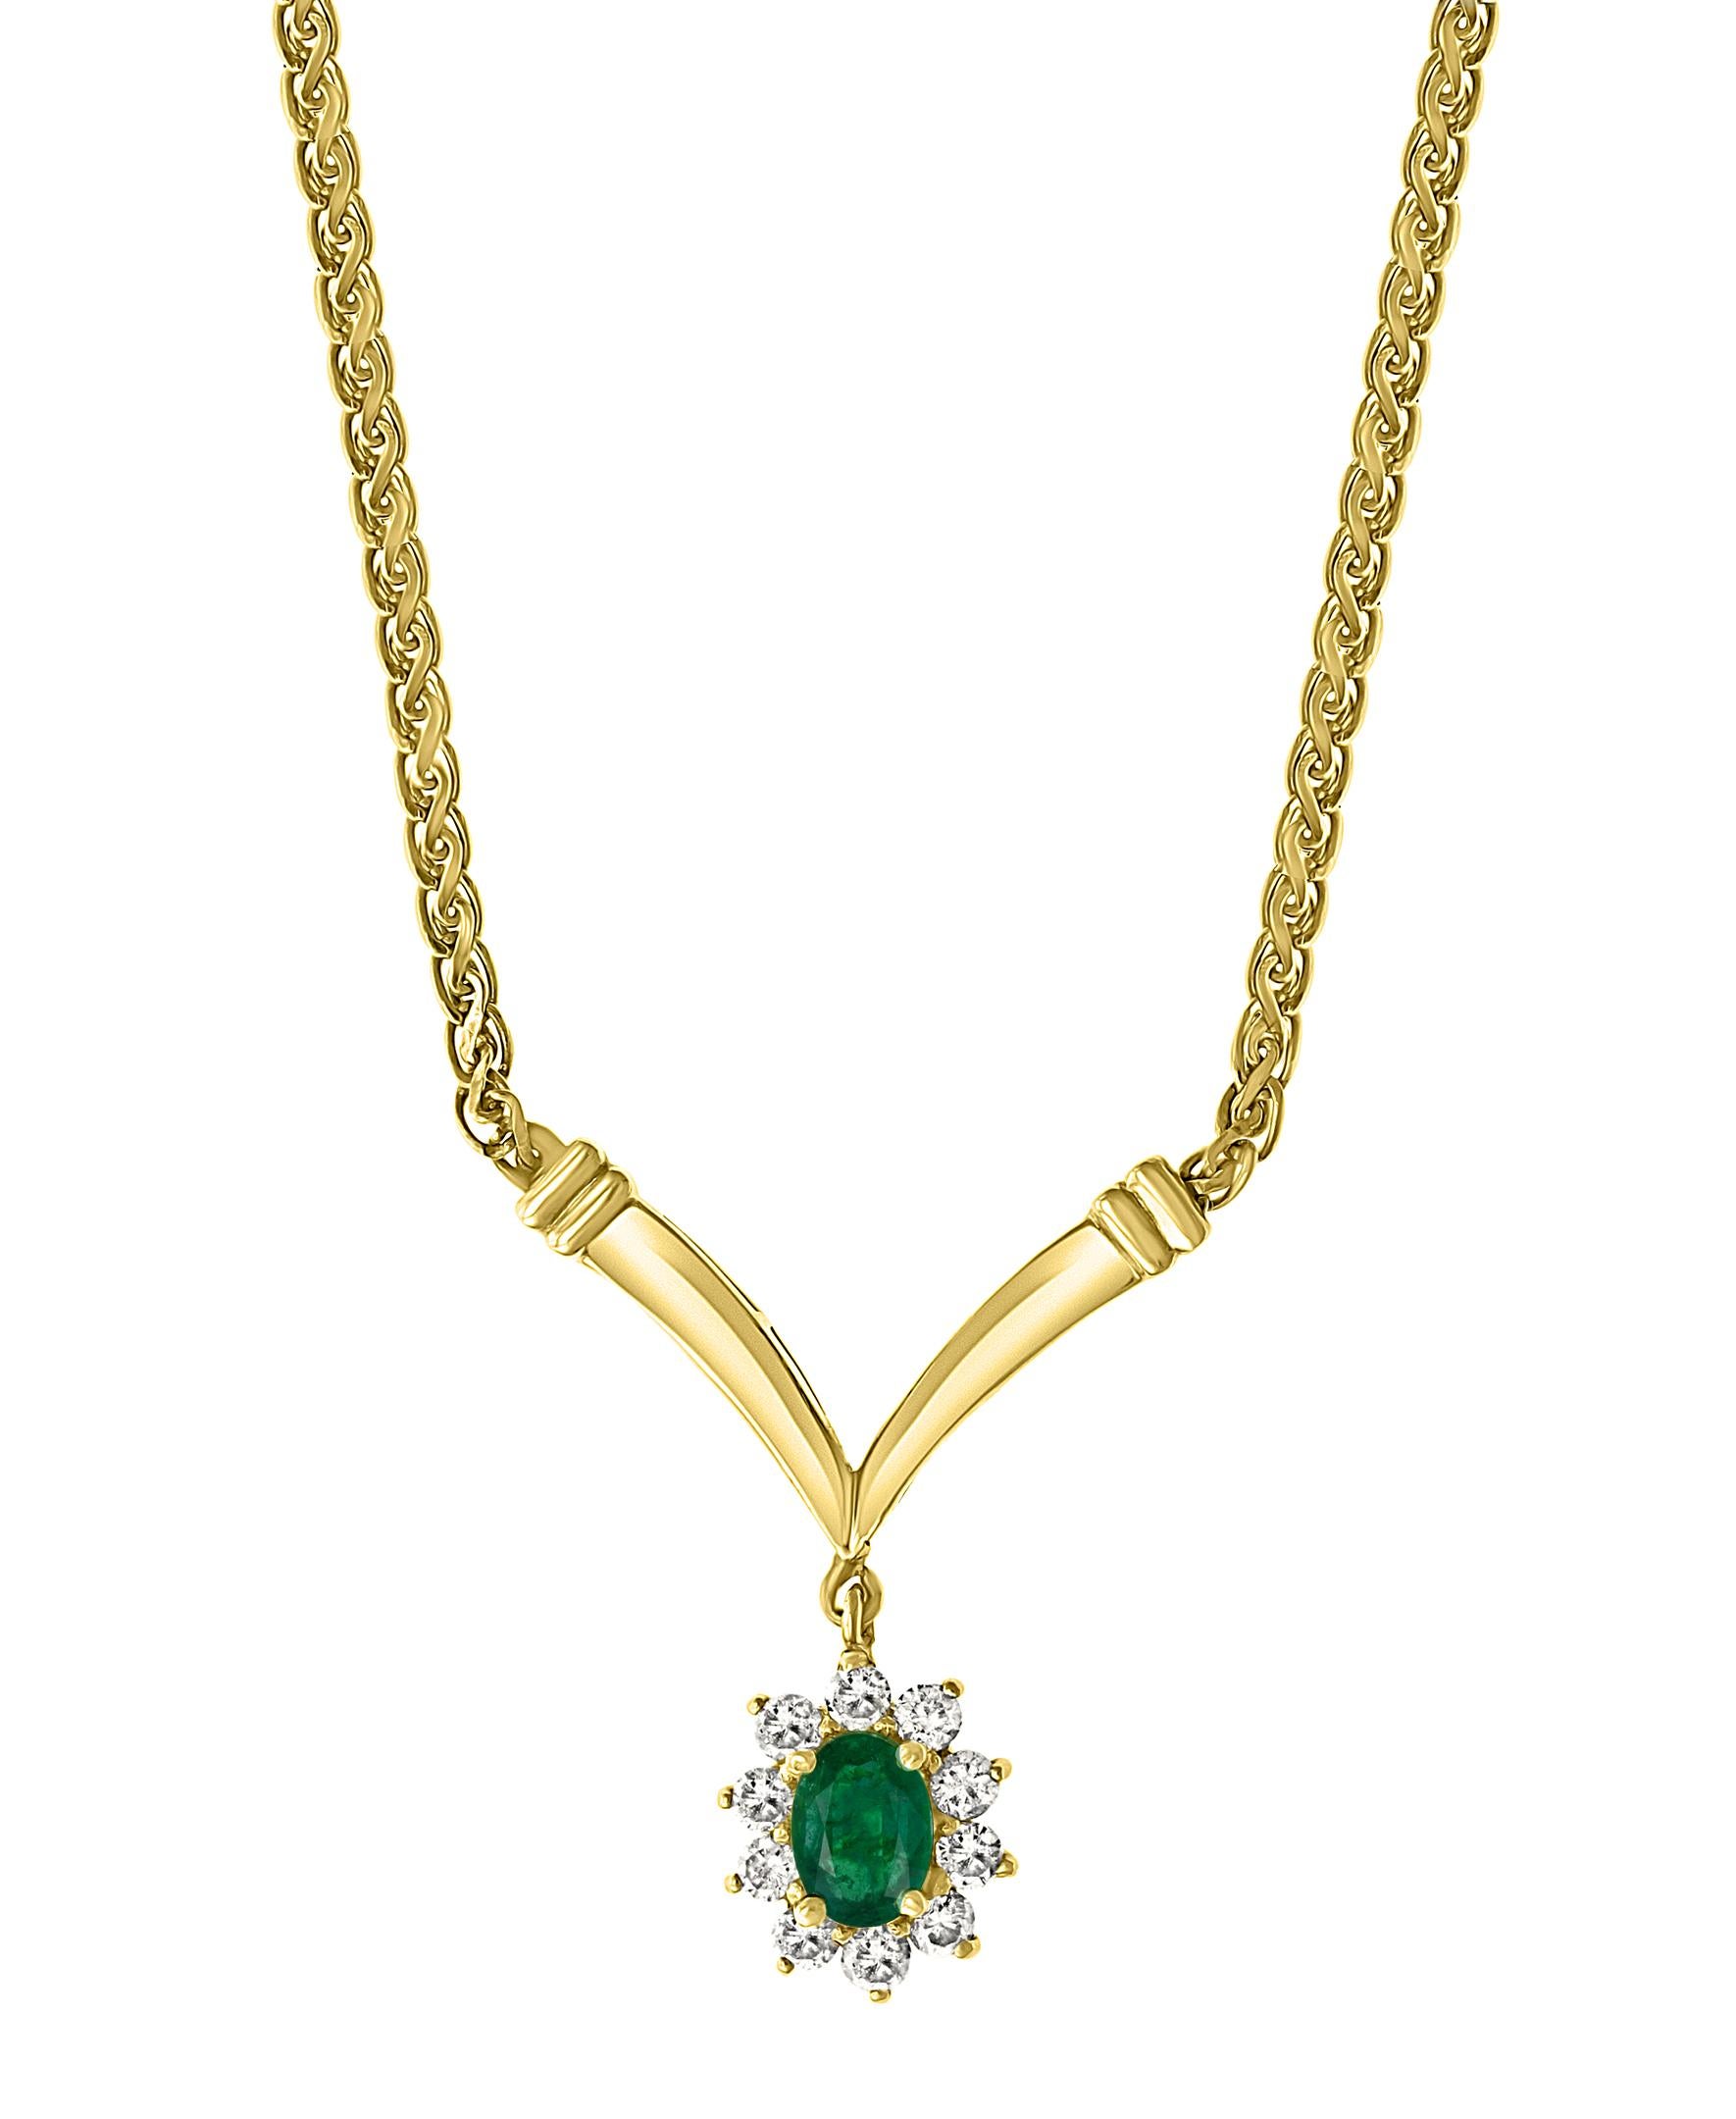 Oval Cut 1.2 Carat Oval Shape Emerald & .5 Carat Diamond Necklace in 14 Karat Yellow Gold